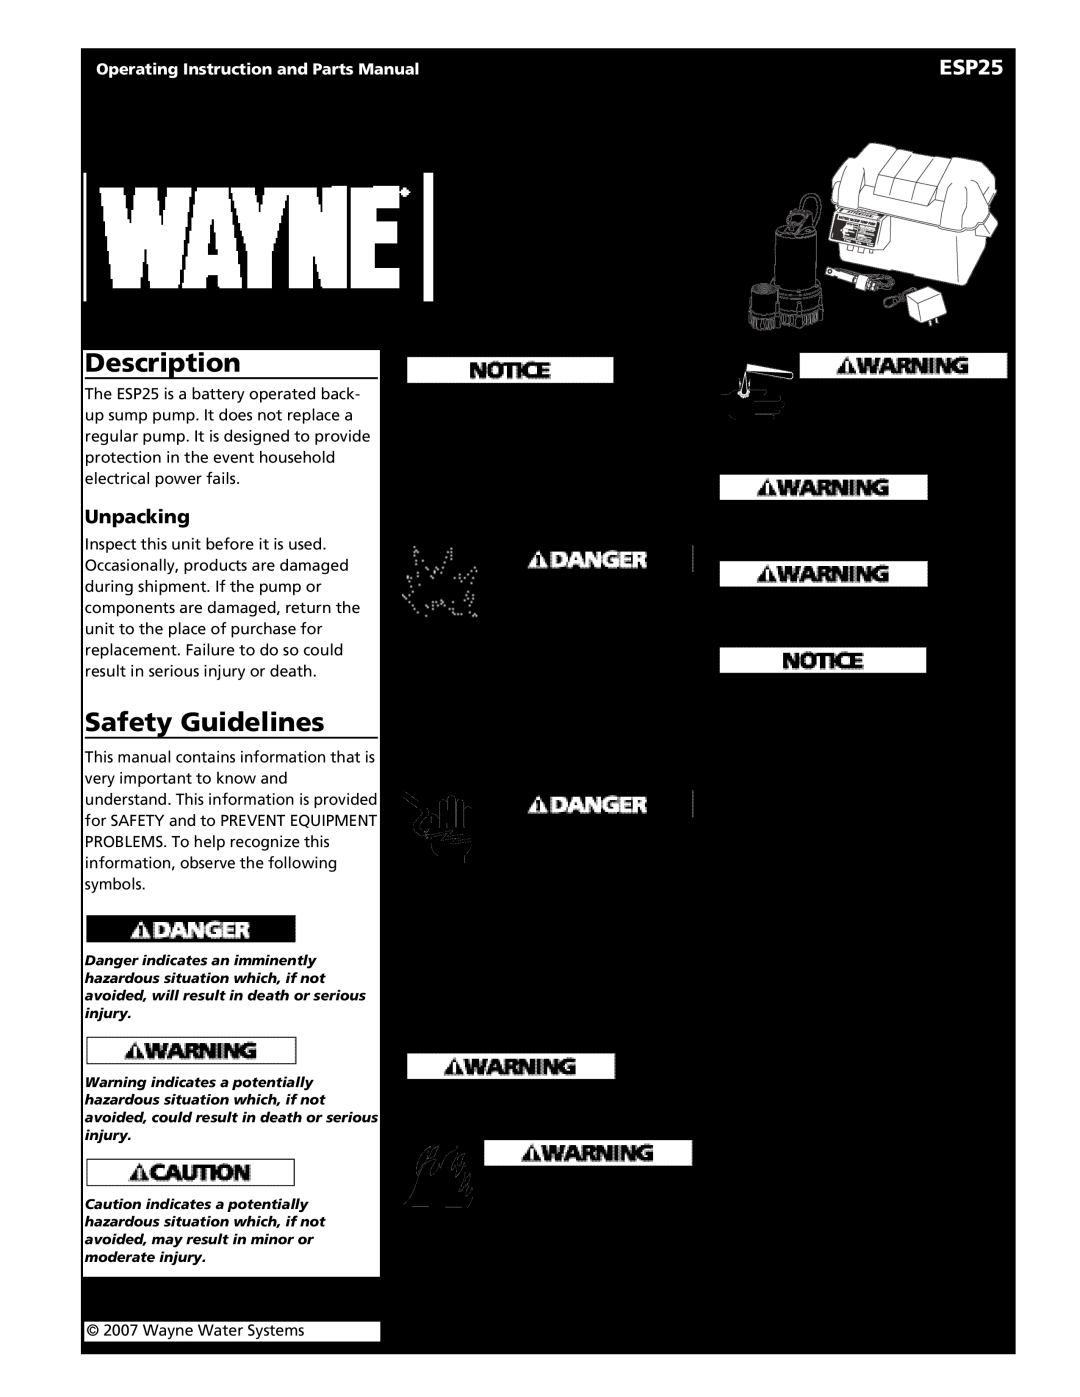 Wayne 352205-001 warranty Description, Safety Guidelines, General Safety Information, Battery Information, ESP25 